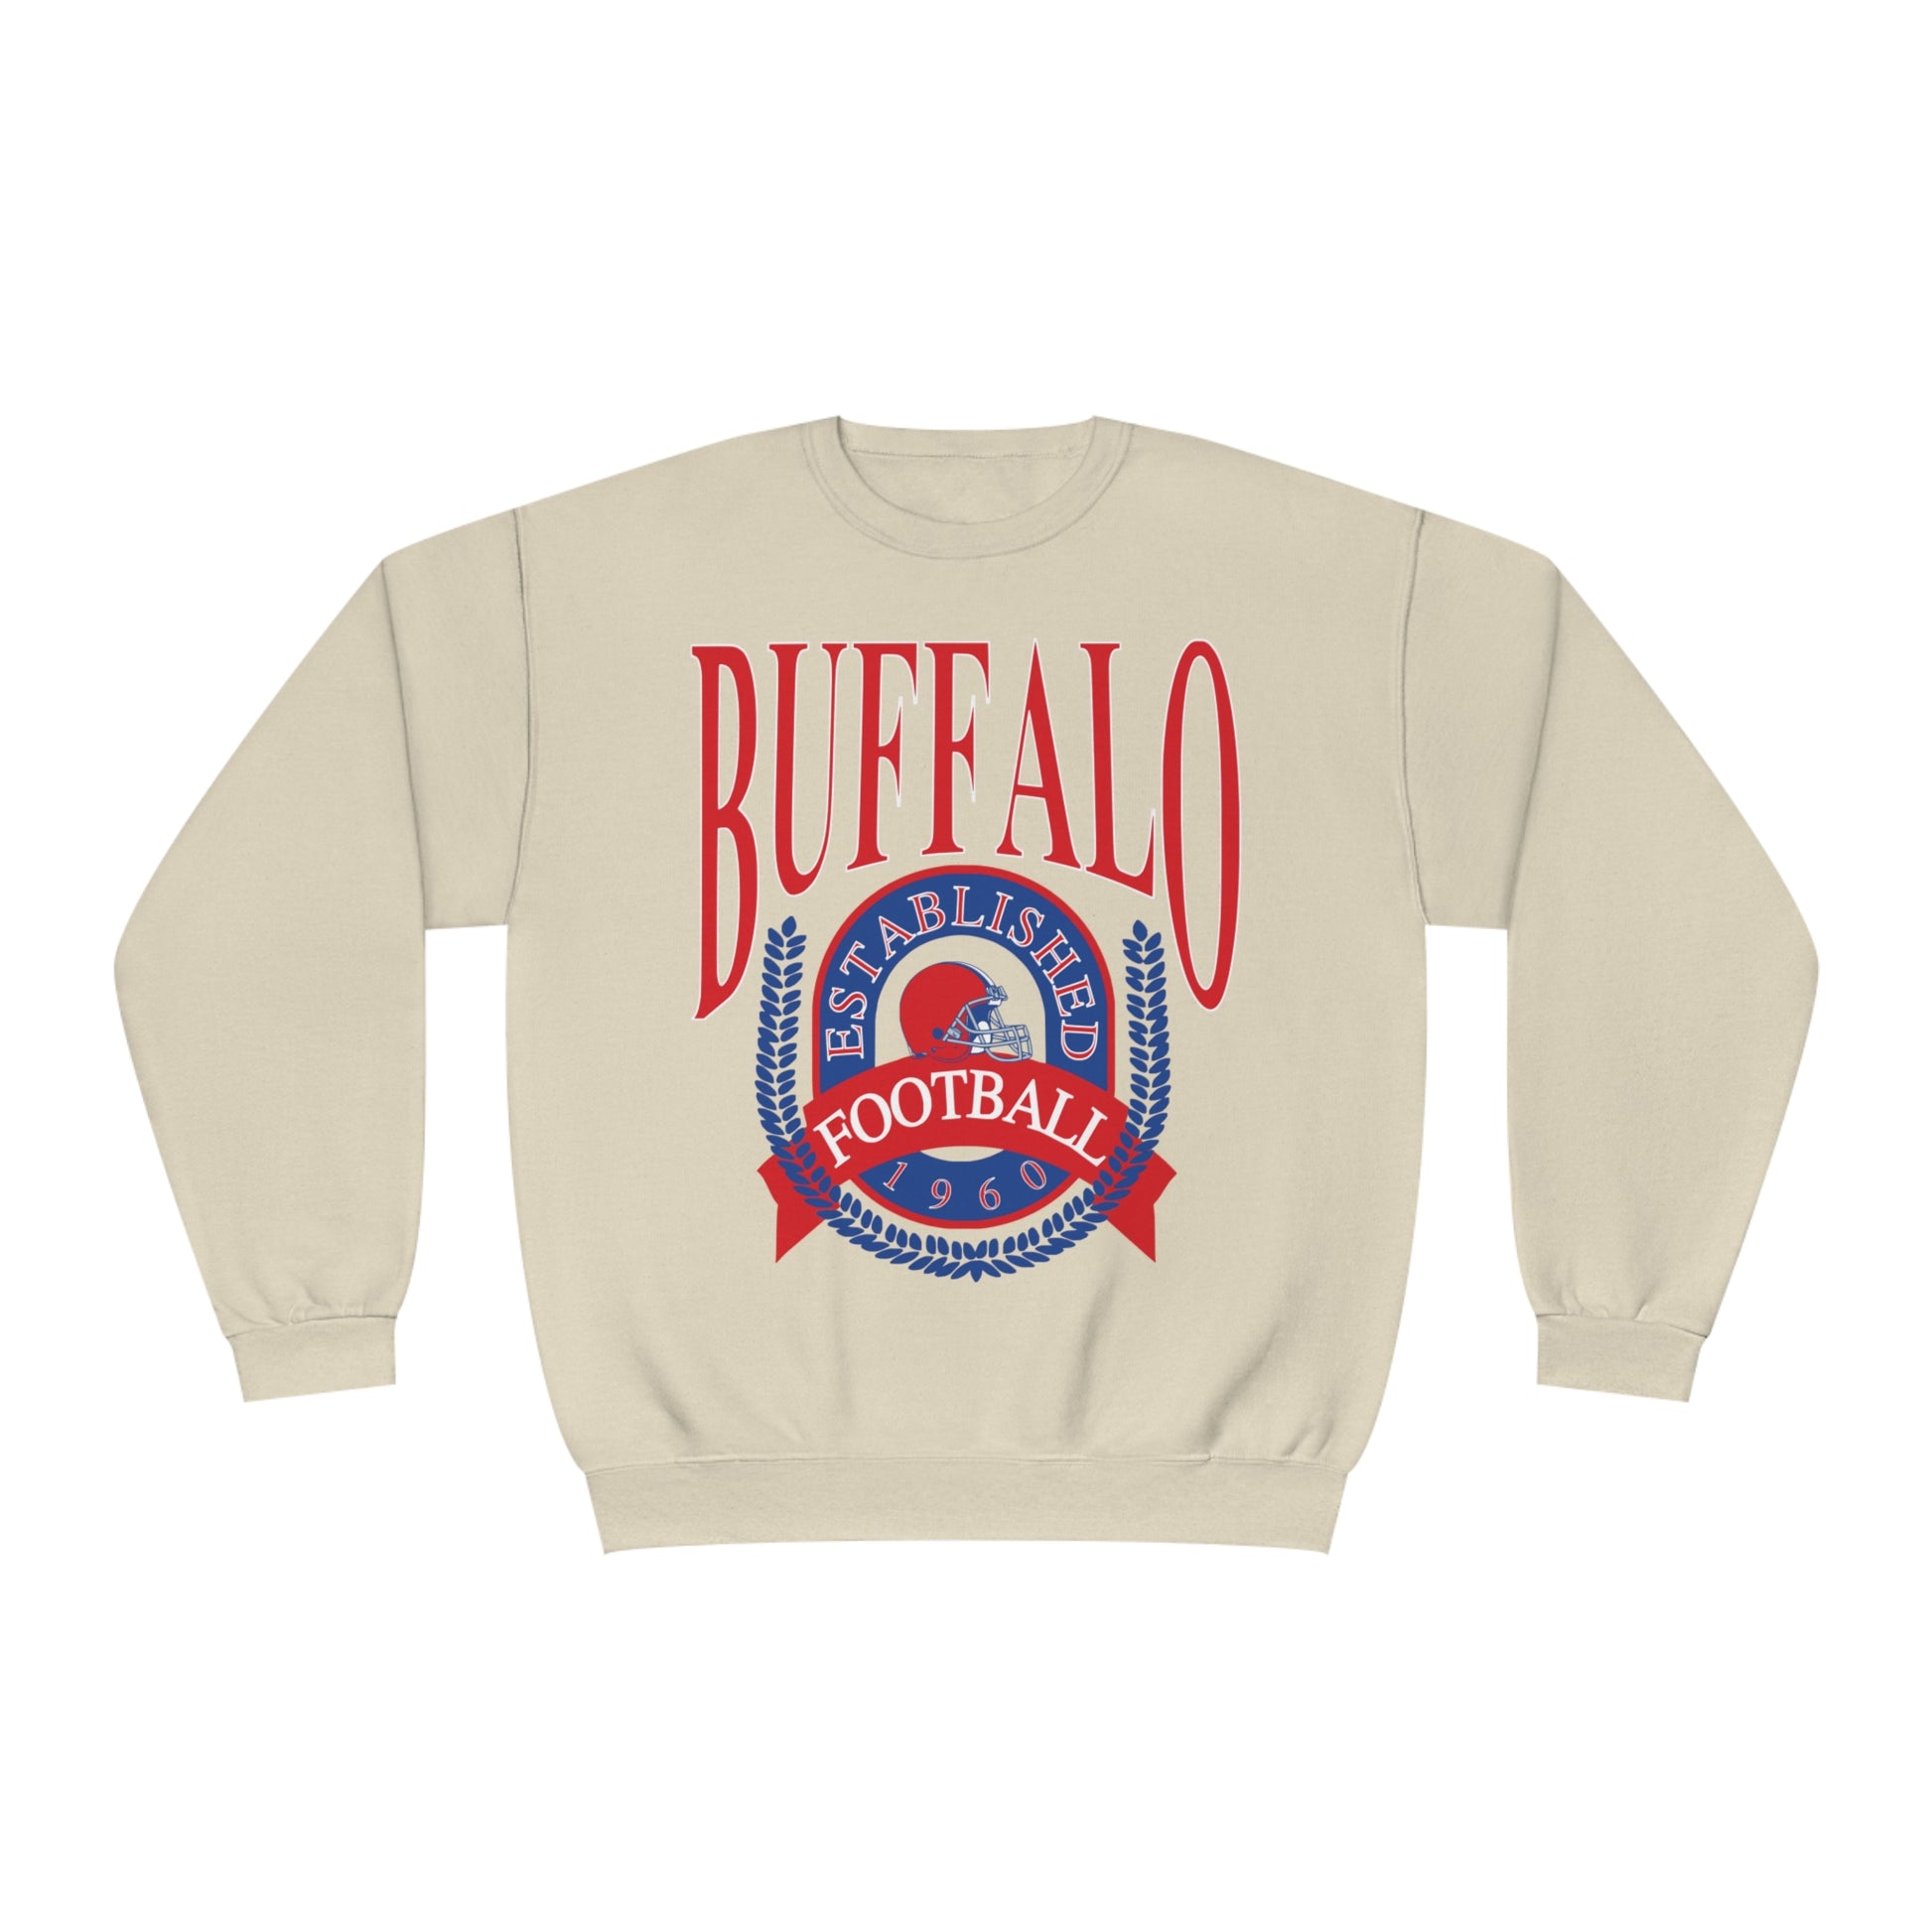 Vintage Buffalo Bills Crewneck Sweatshirt - Retro NFL Football Men's Women's Hoodie - Oversized Apparel - Design 1 Sand Tan Beige